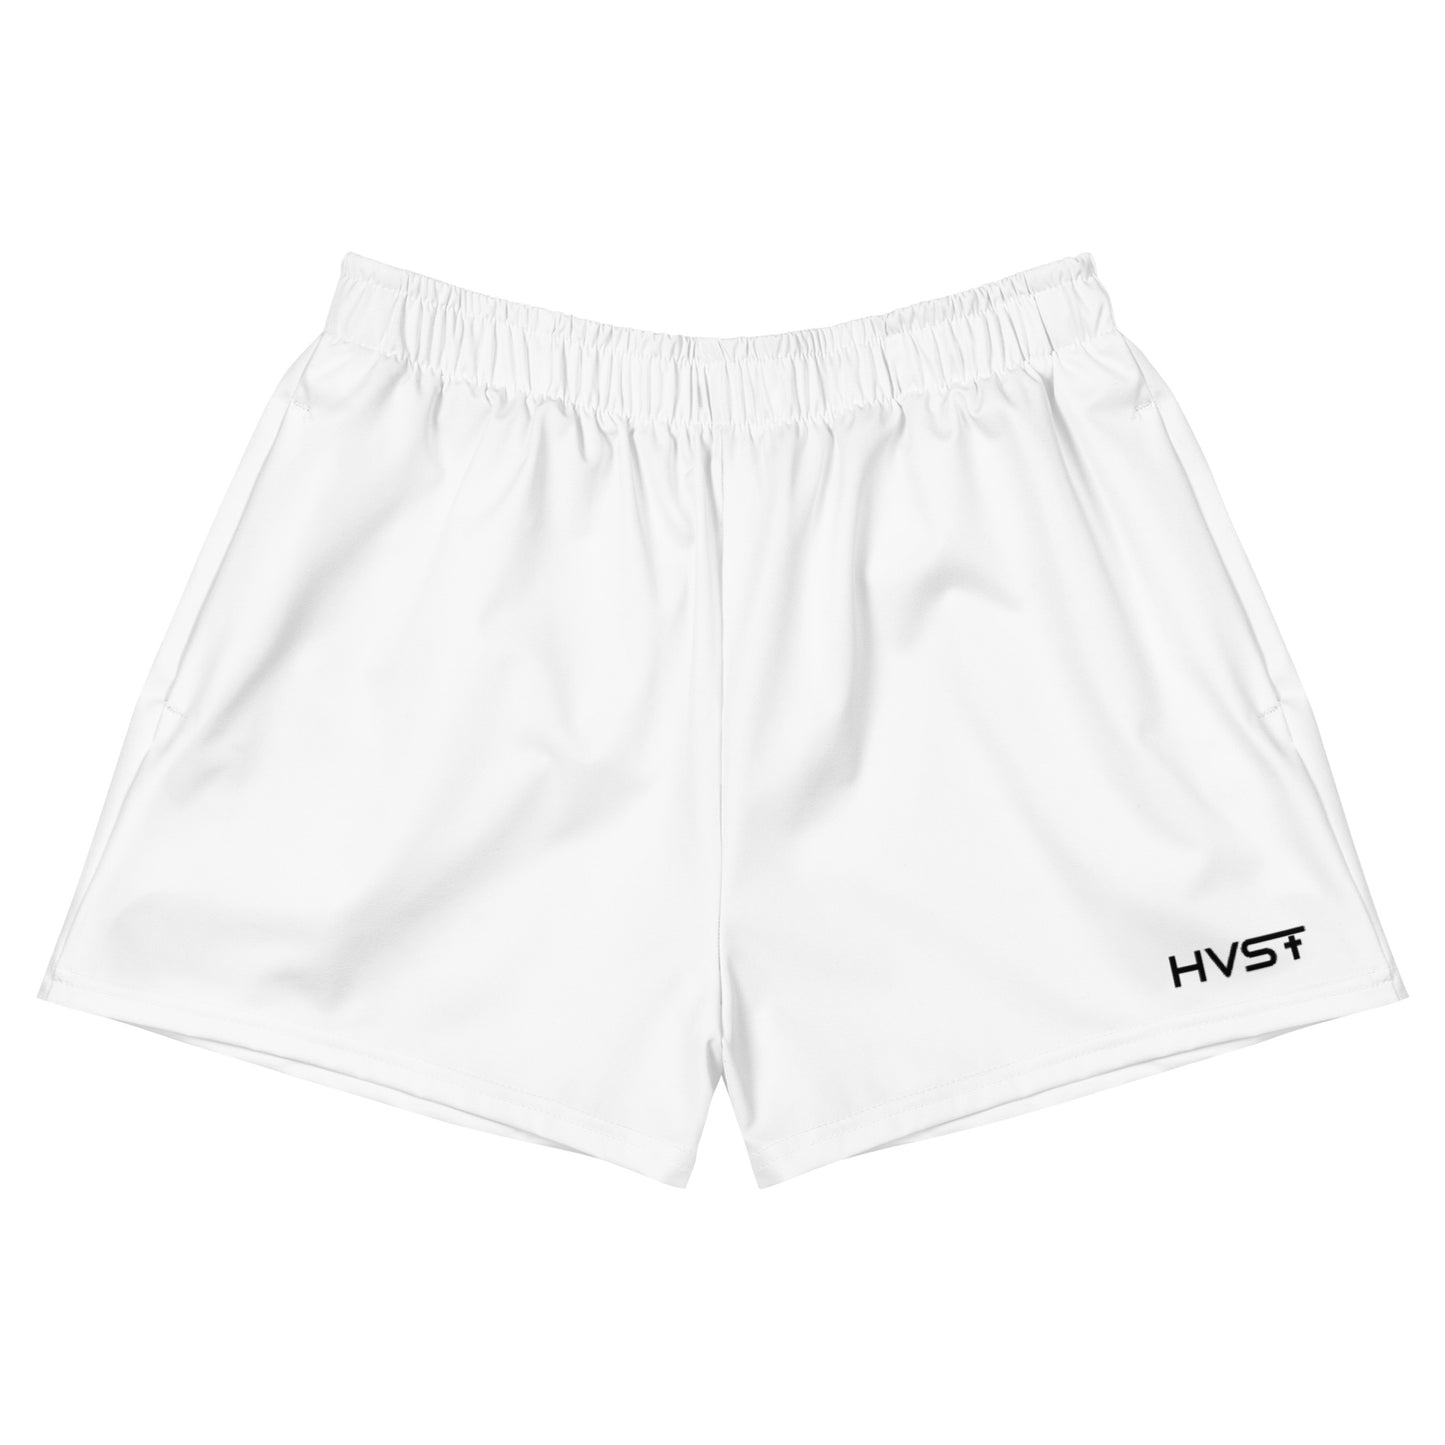 HVST Classic Shorts